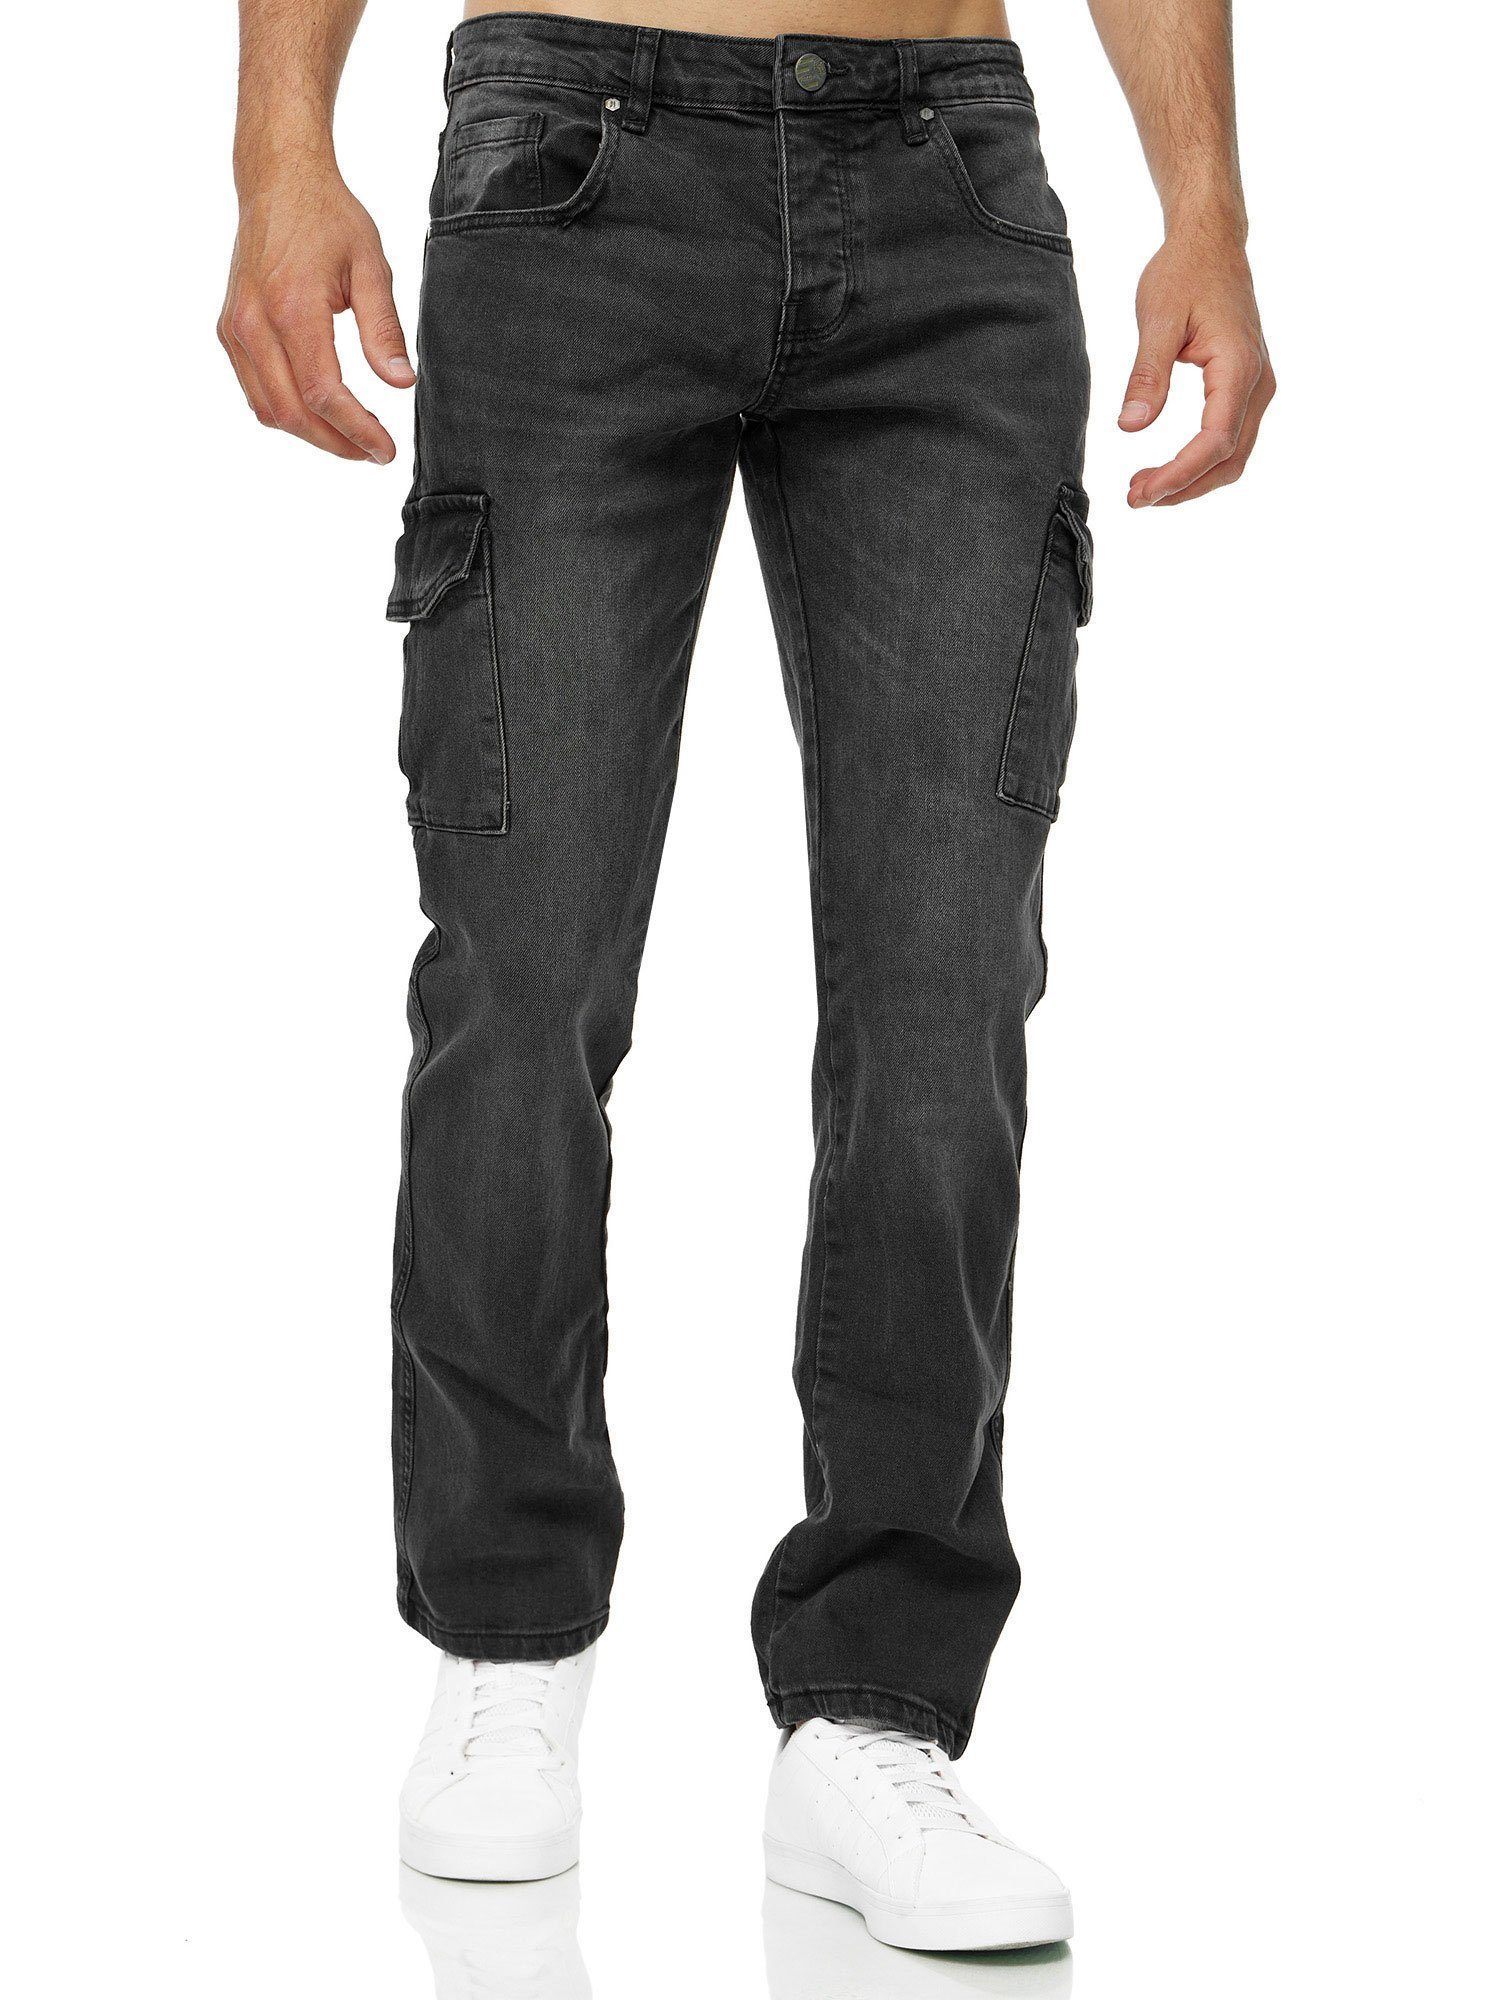 Tazzio Straight-Jeans A104 Regular Fit Cargo Denim Jeans Hose schwarz | Stretchjeans